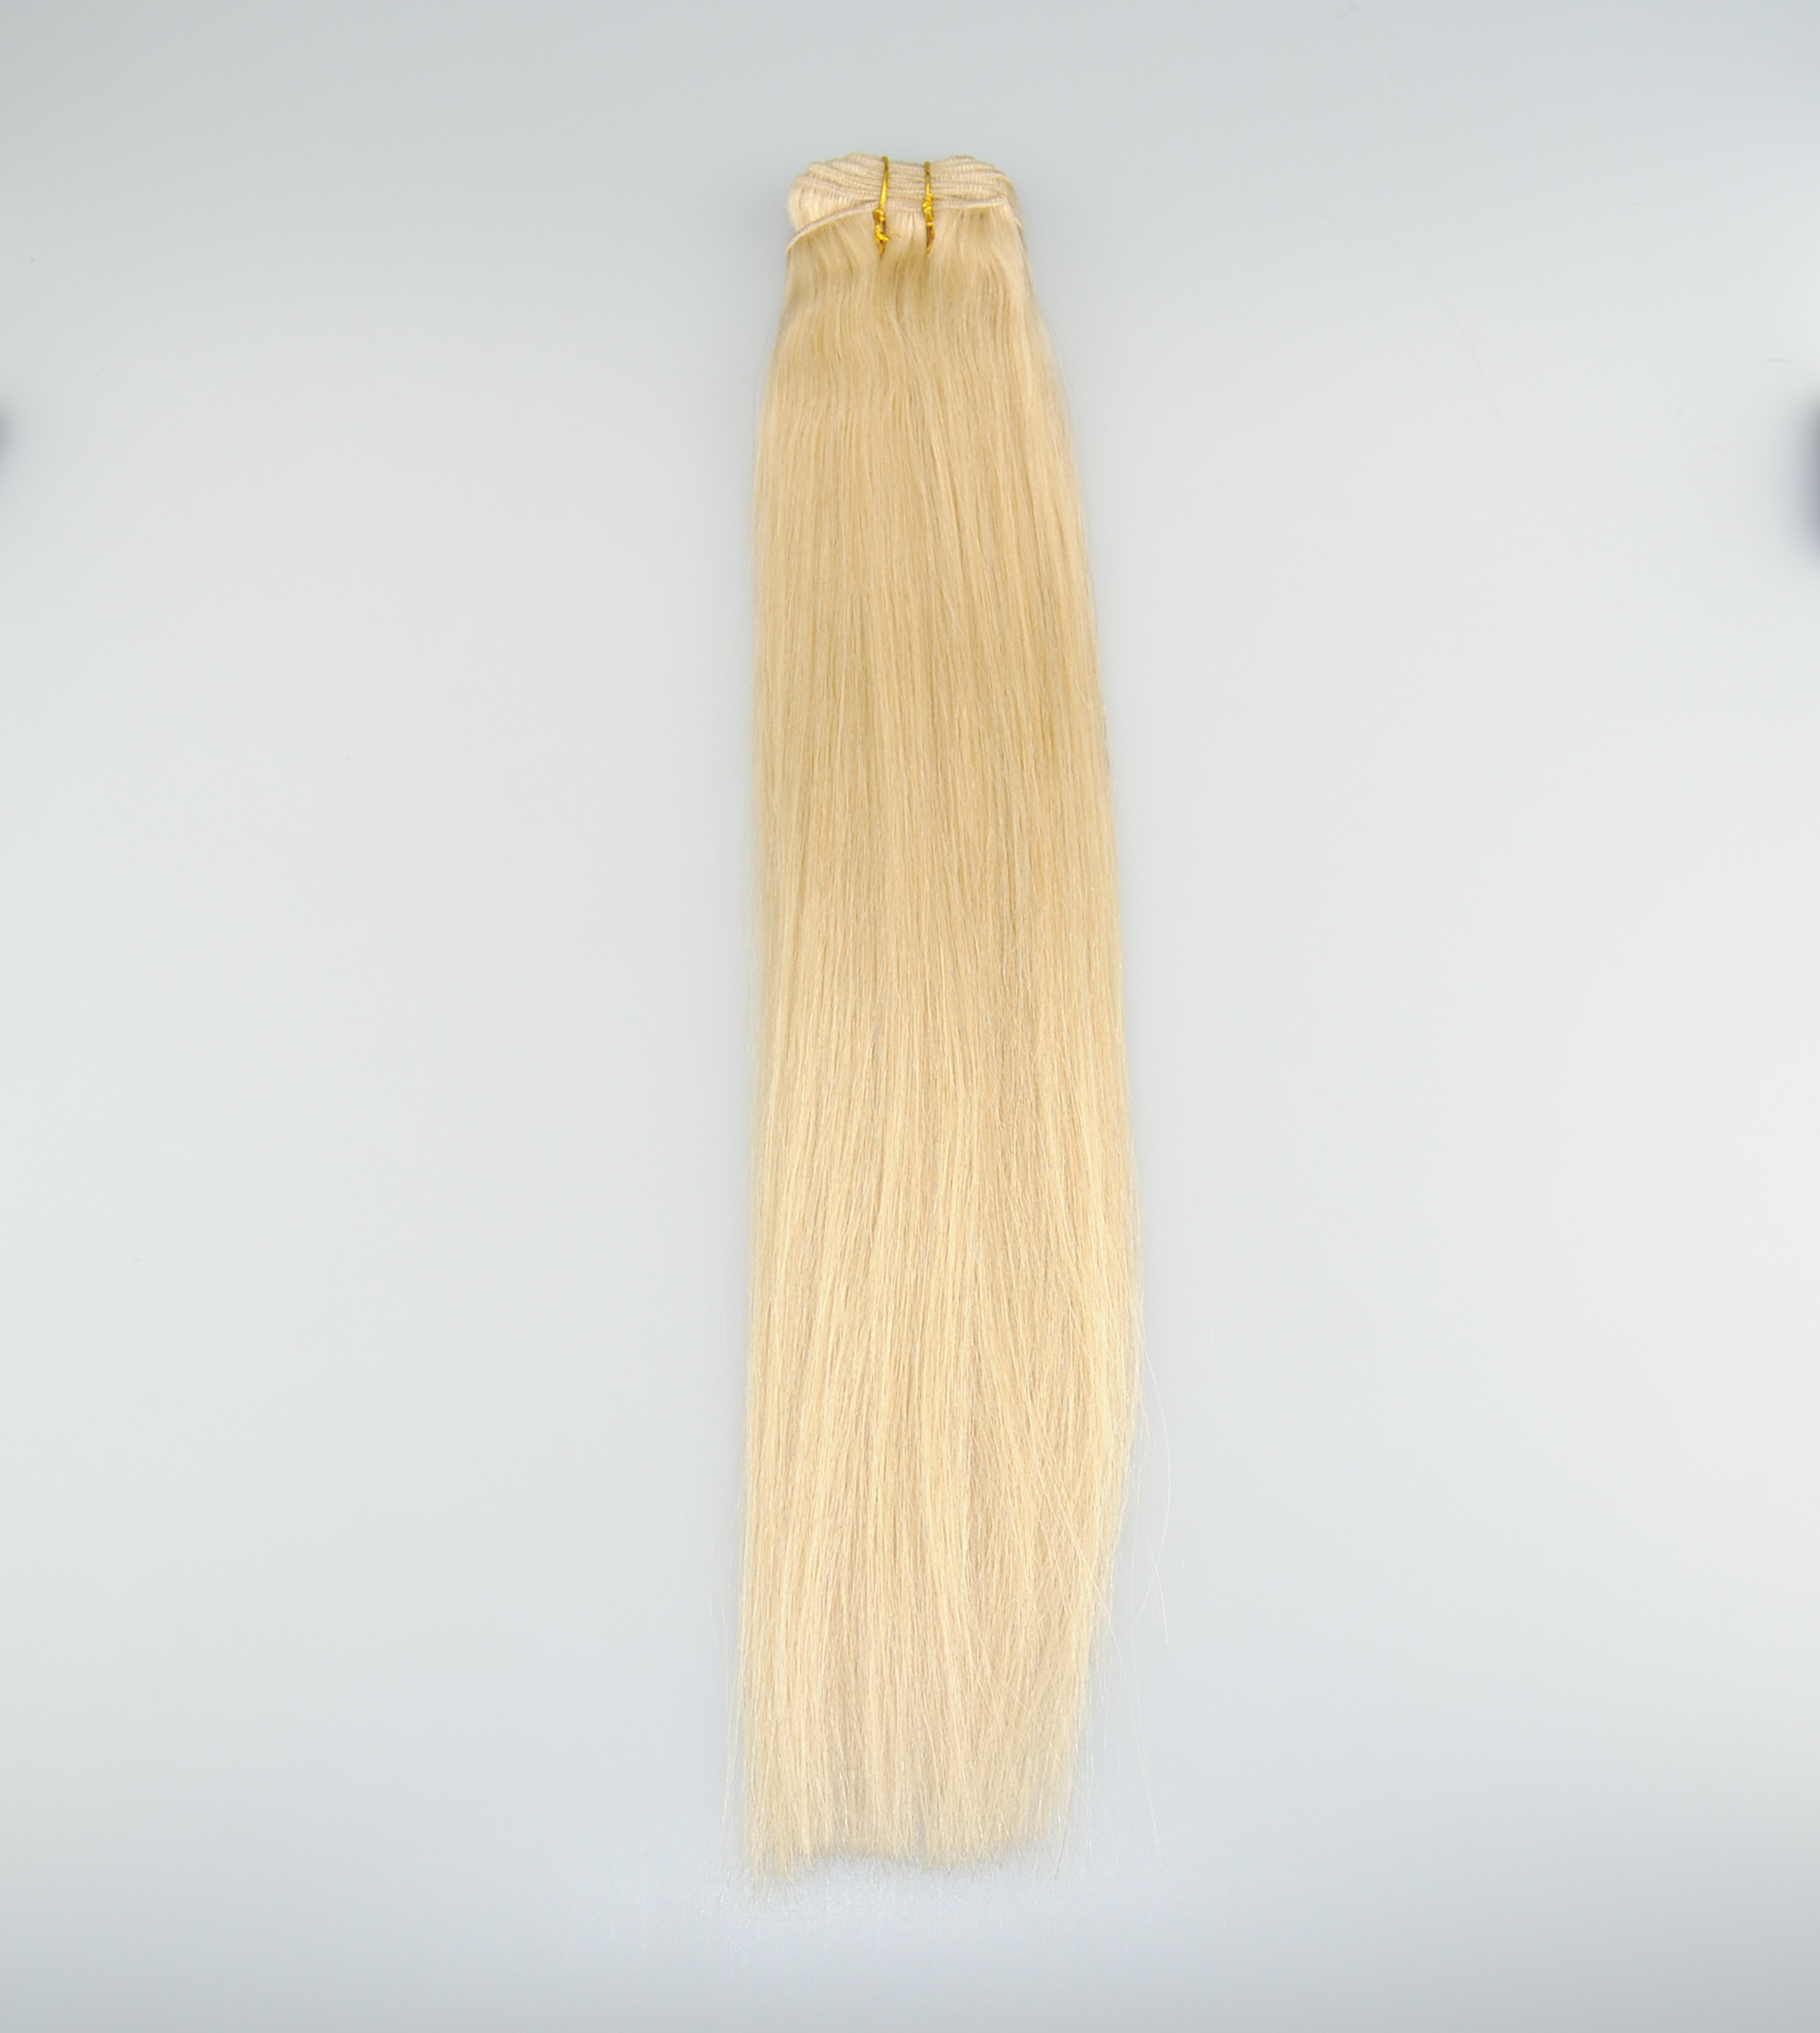 2016 wholesale alibaba full head blonde color 100% human hair weave 18inch cheap virgin peruvian hair